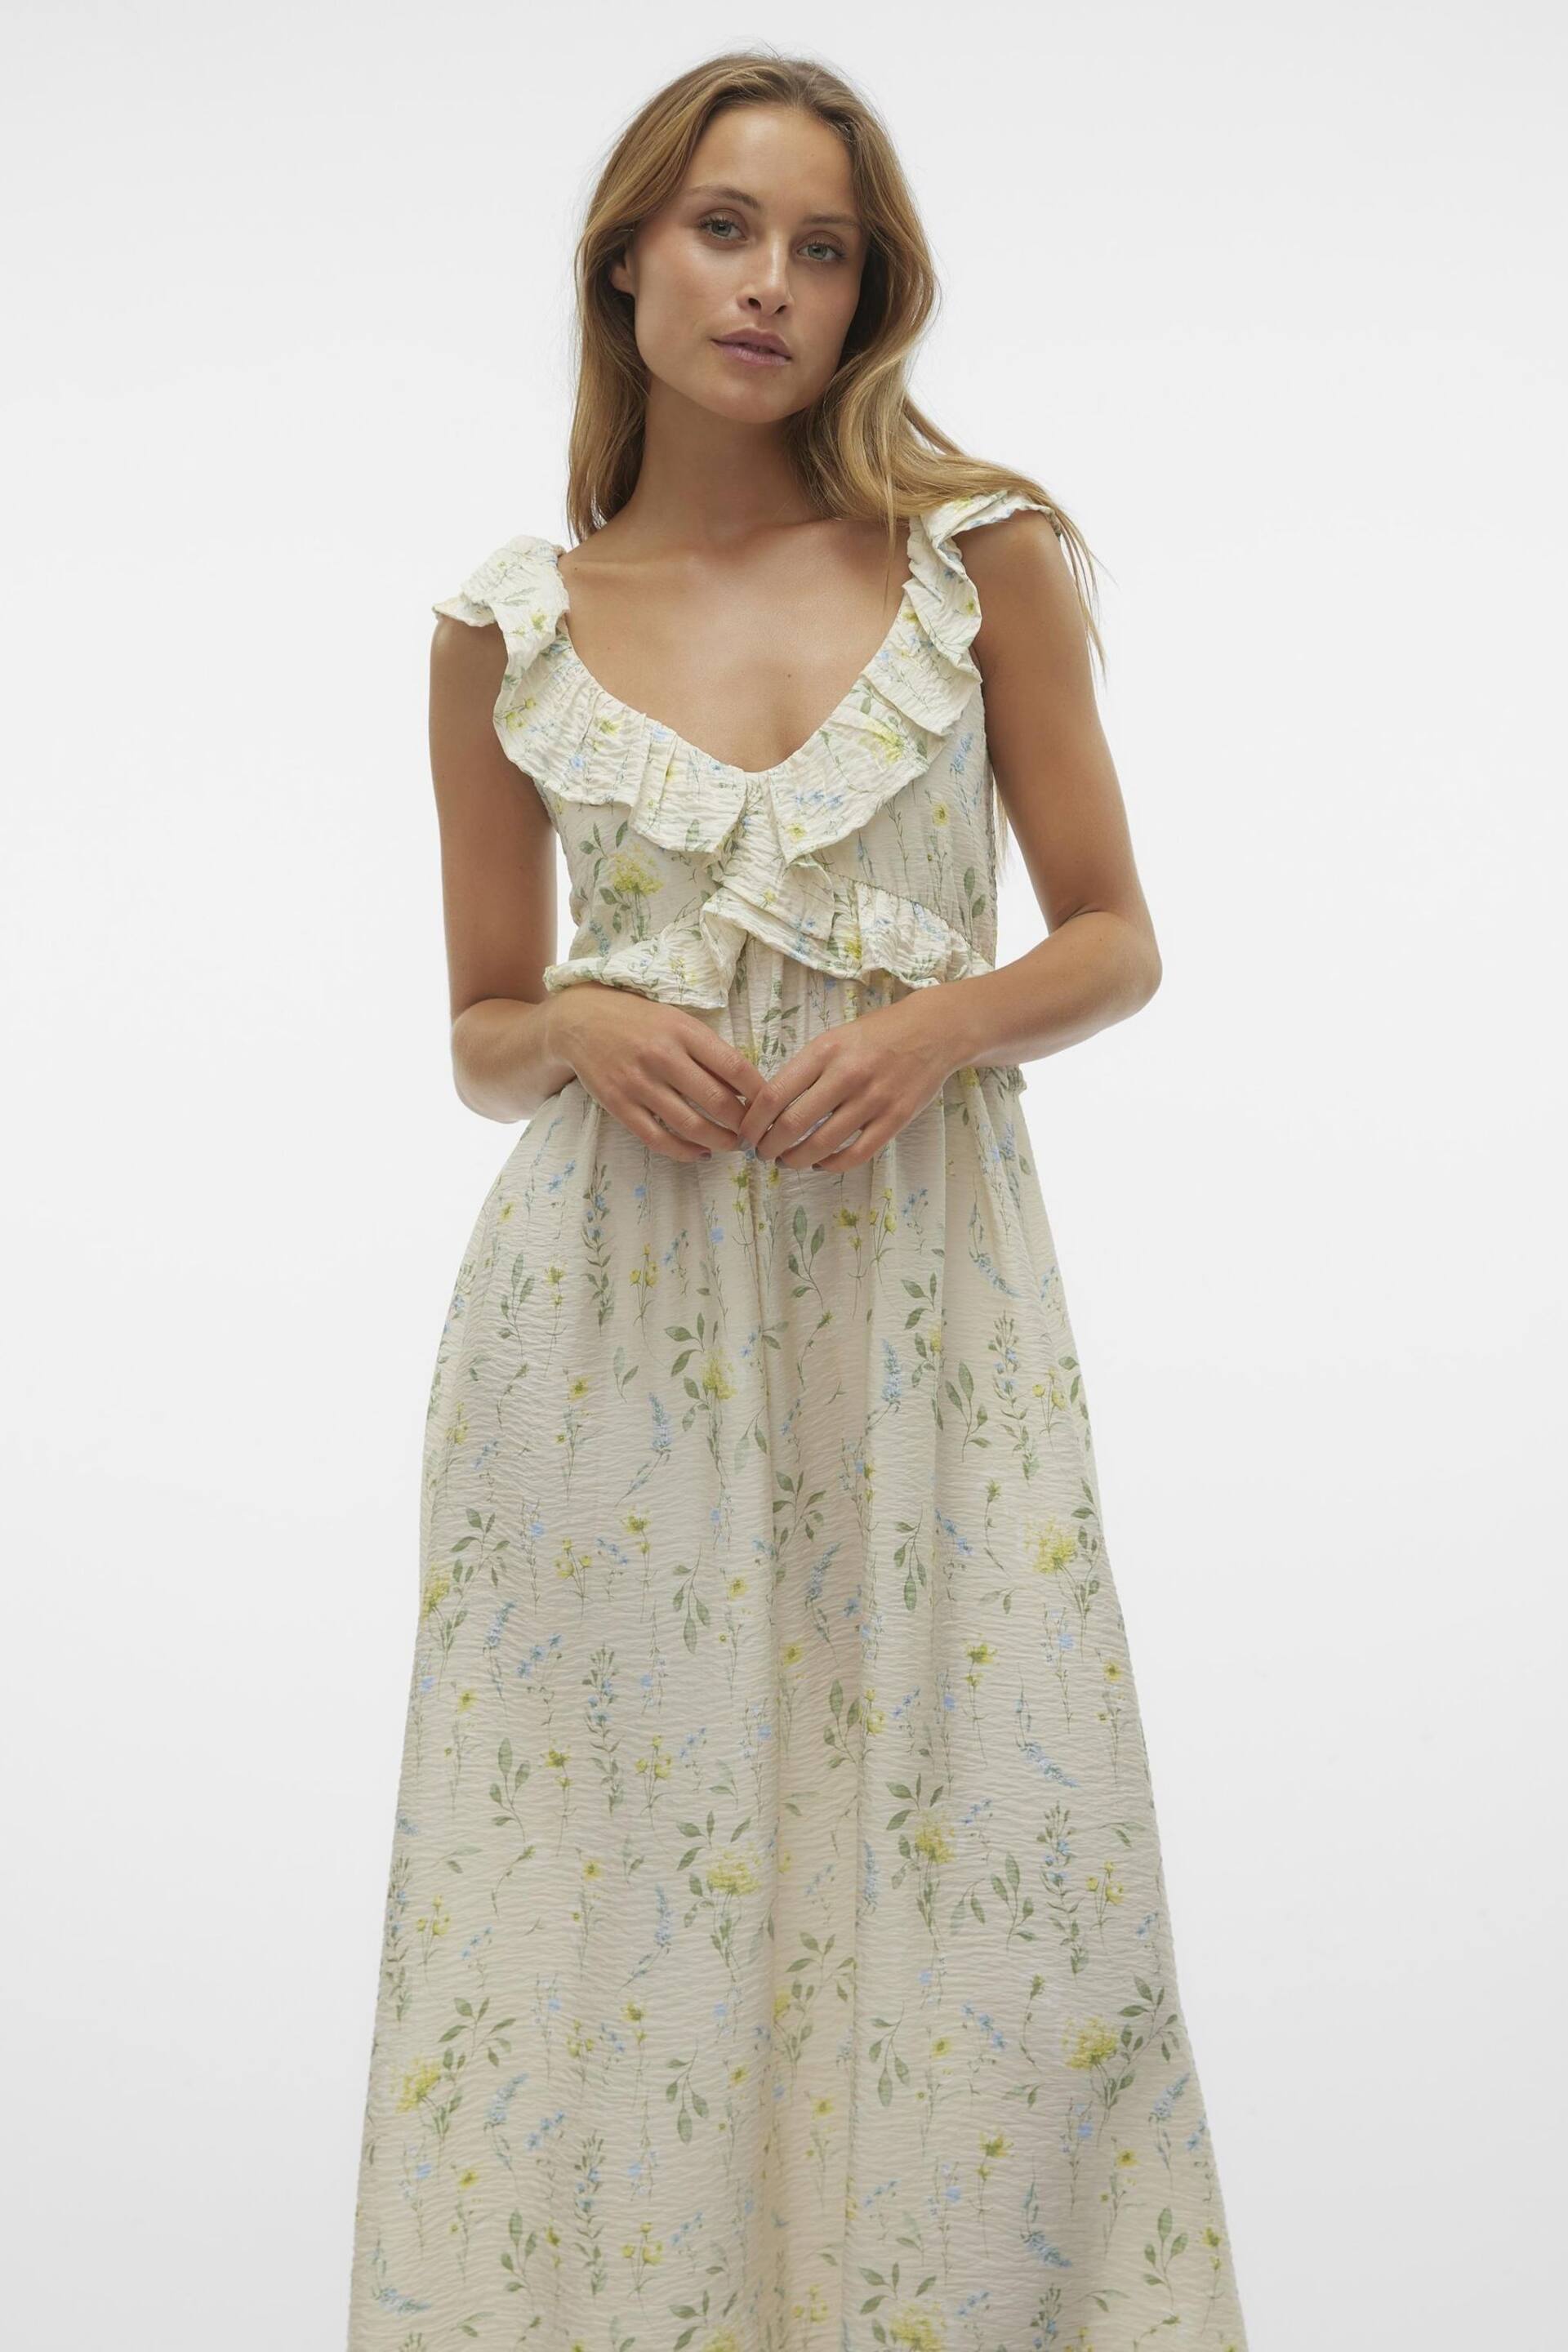 VERO MODA Cream Ruffle Tie Back Floral Maxi Dress - Image 3 of 6